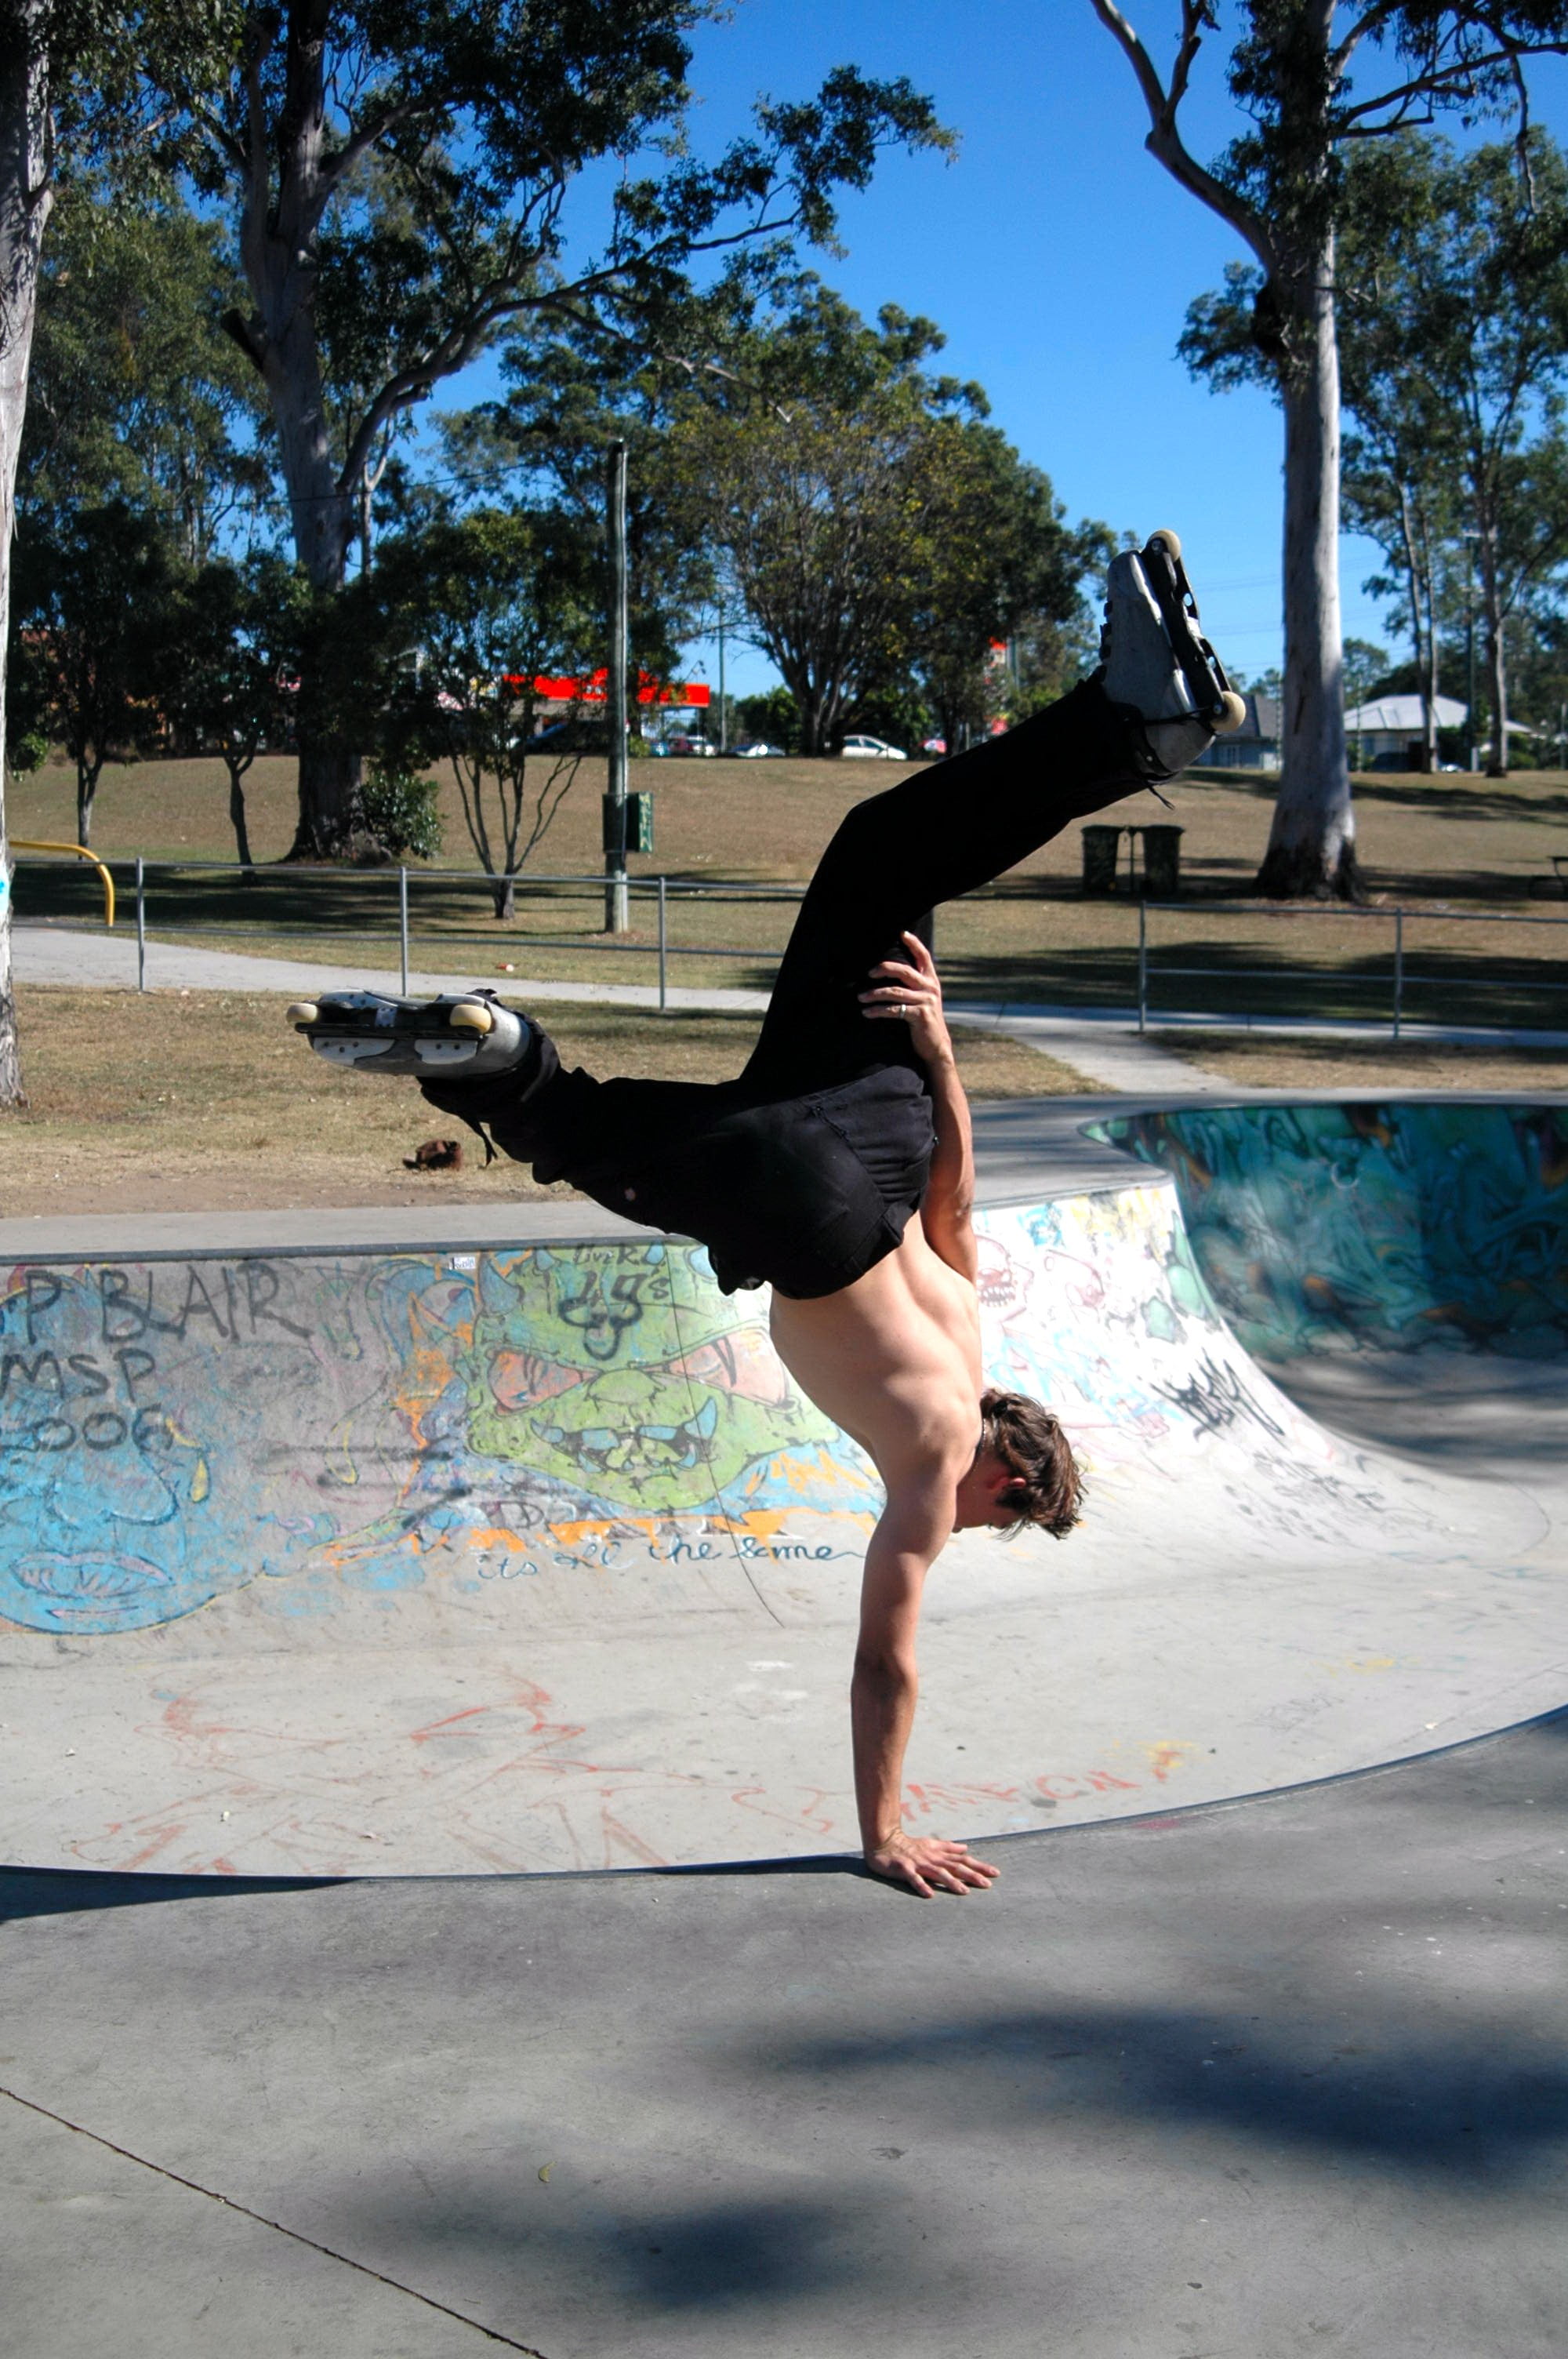 handstand, rollerblading, graffiti, sport, full length, balance